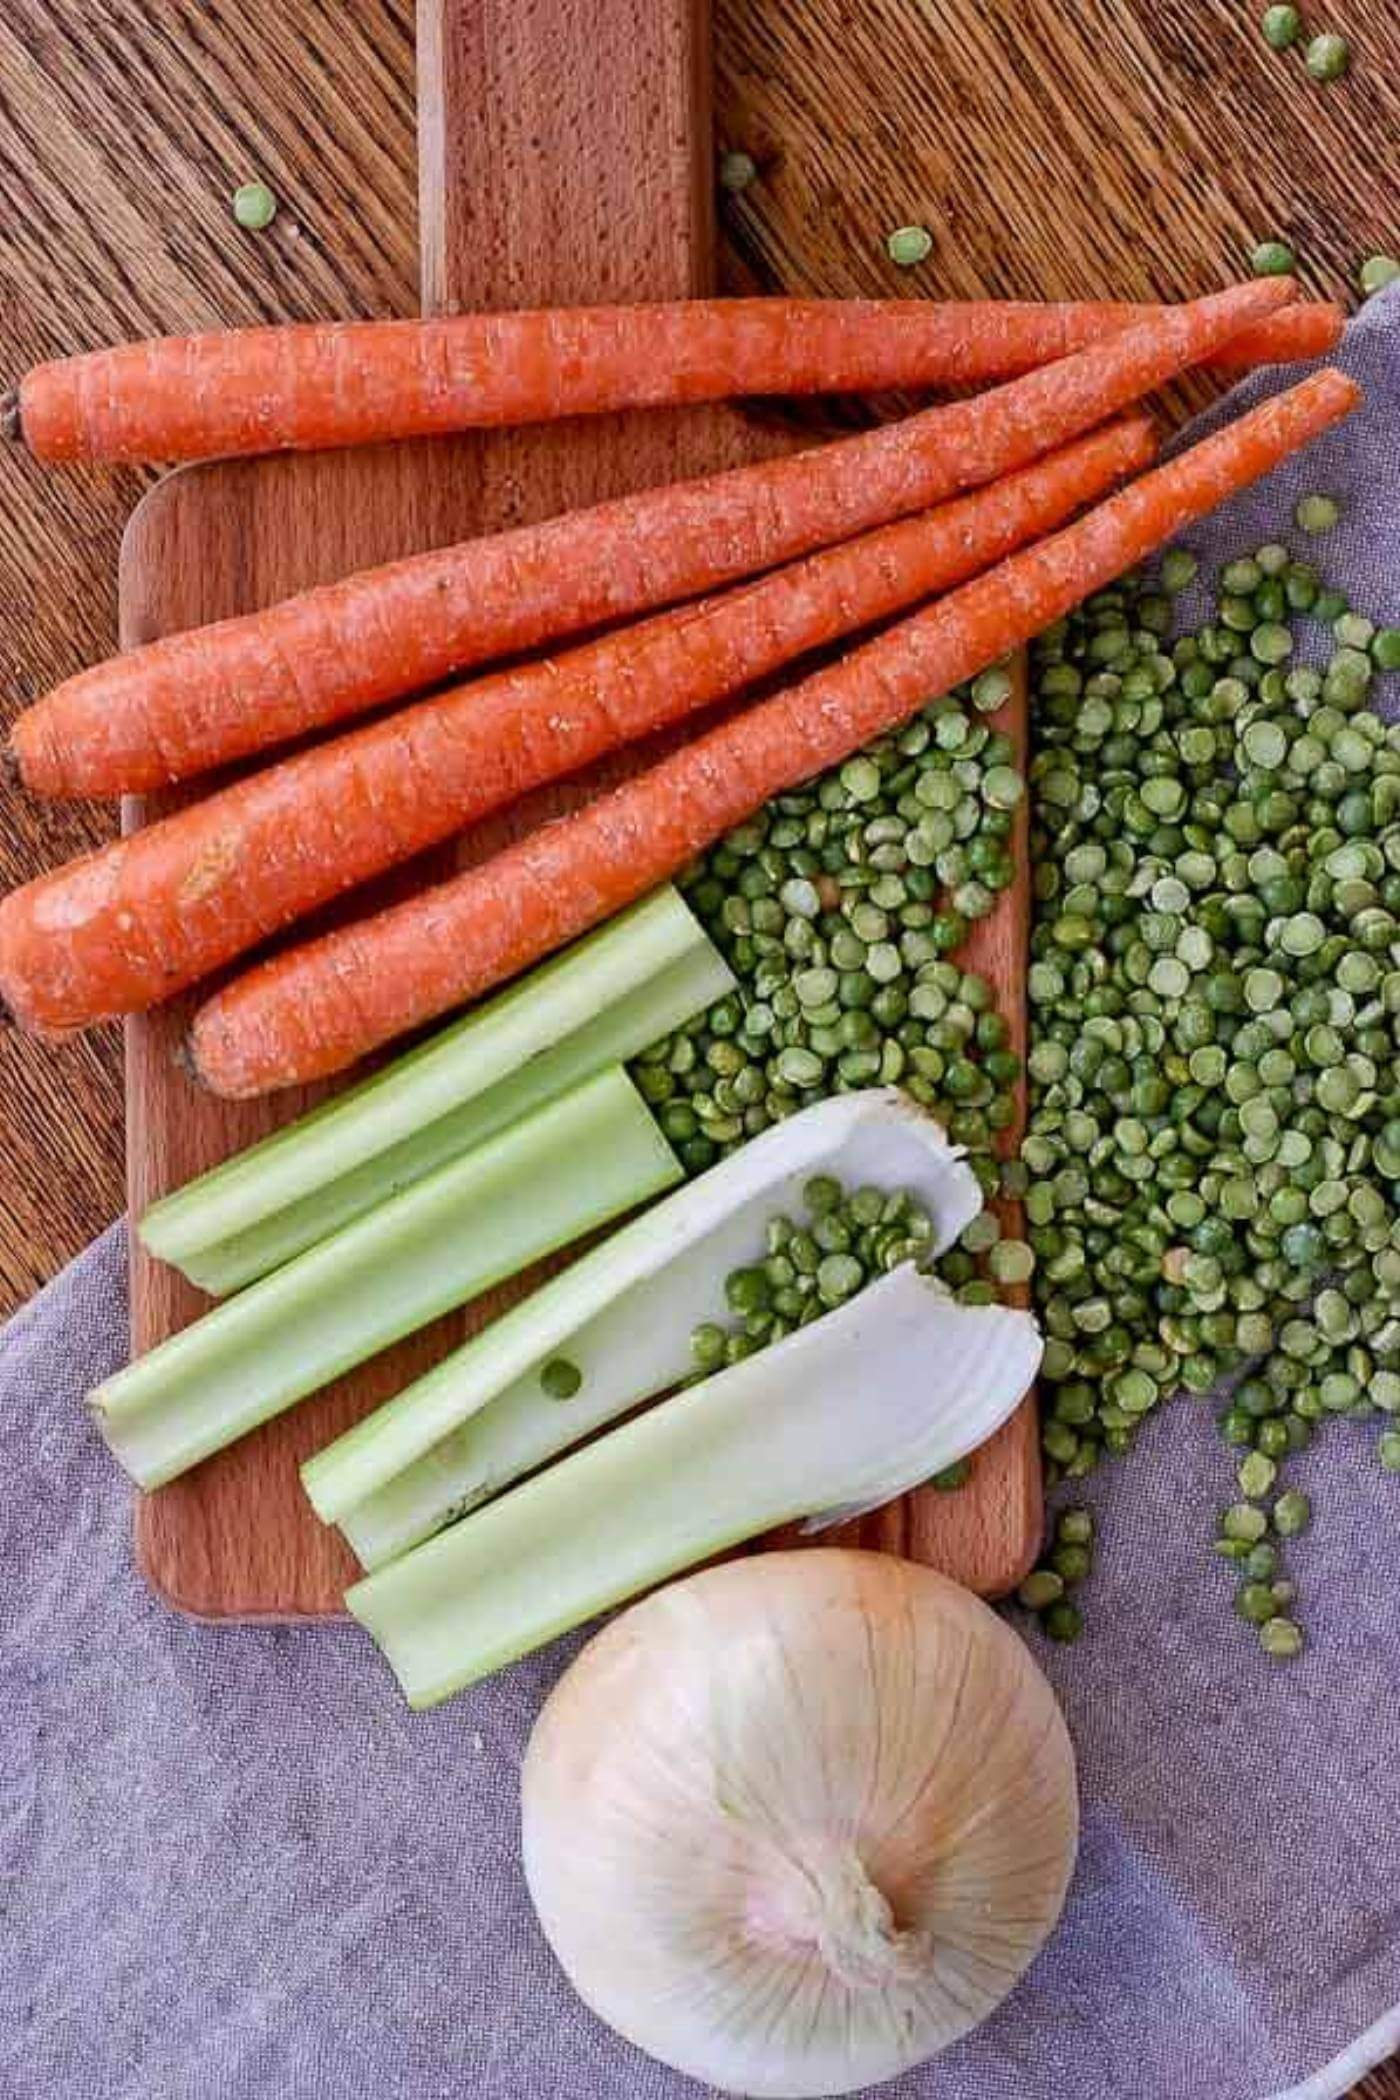 carrots, celery, onion and split peas on table.